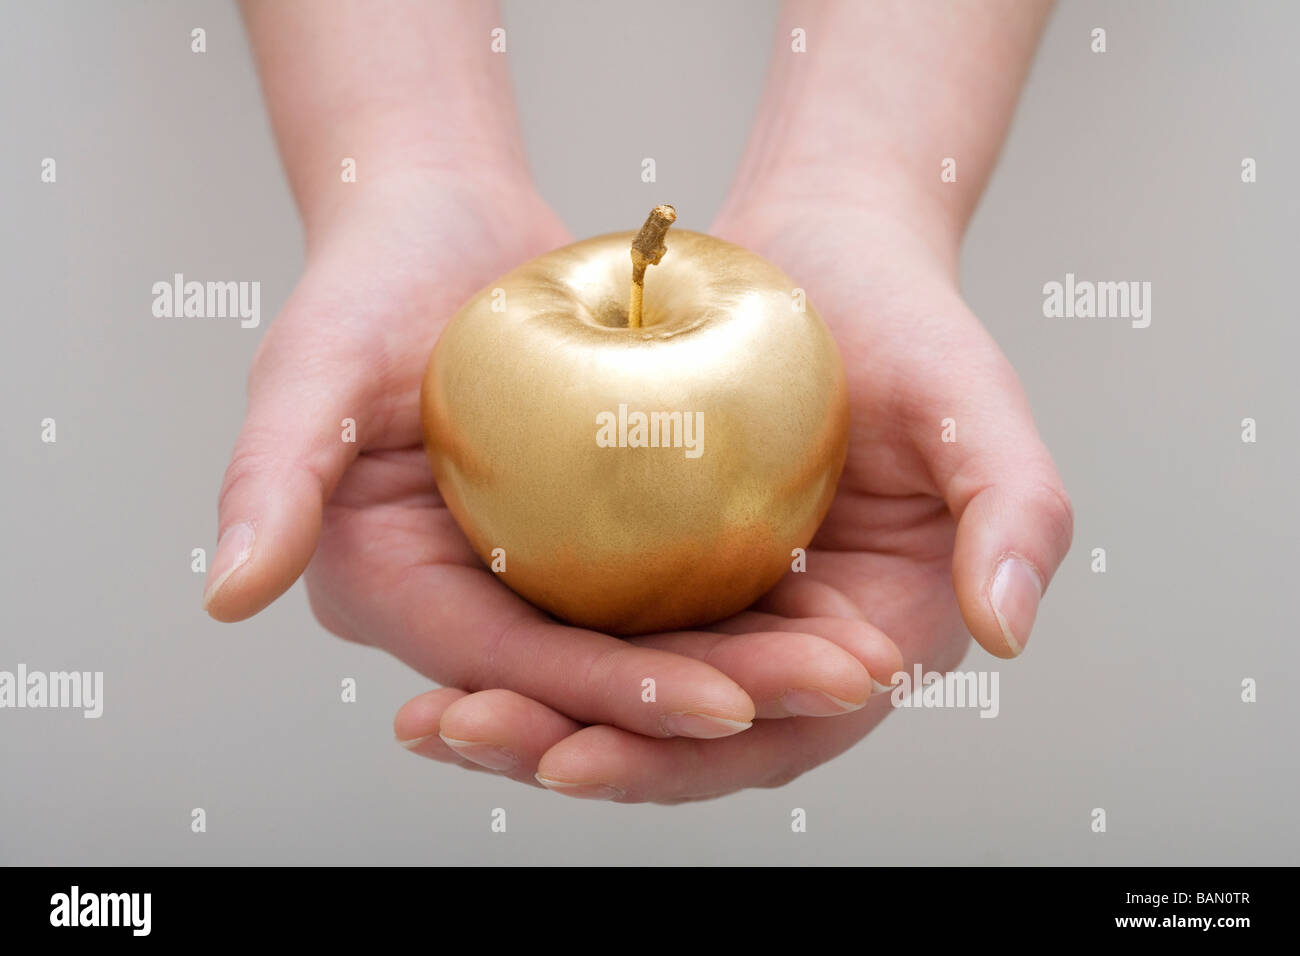 A golden apple Stock Photo